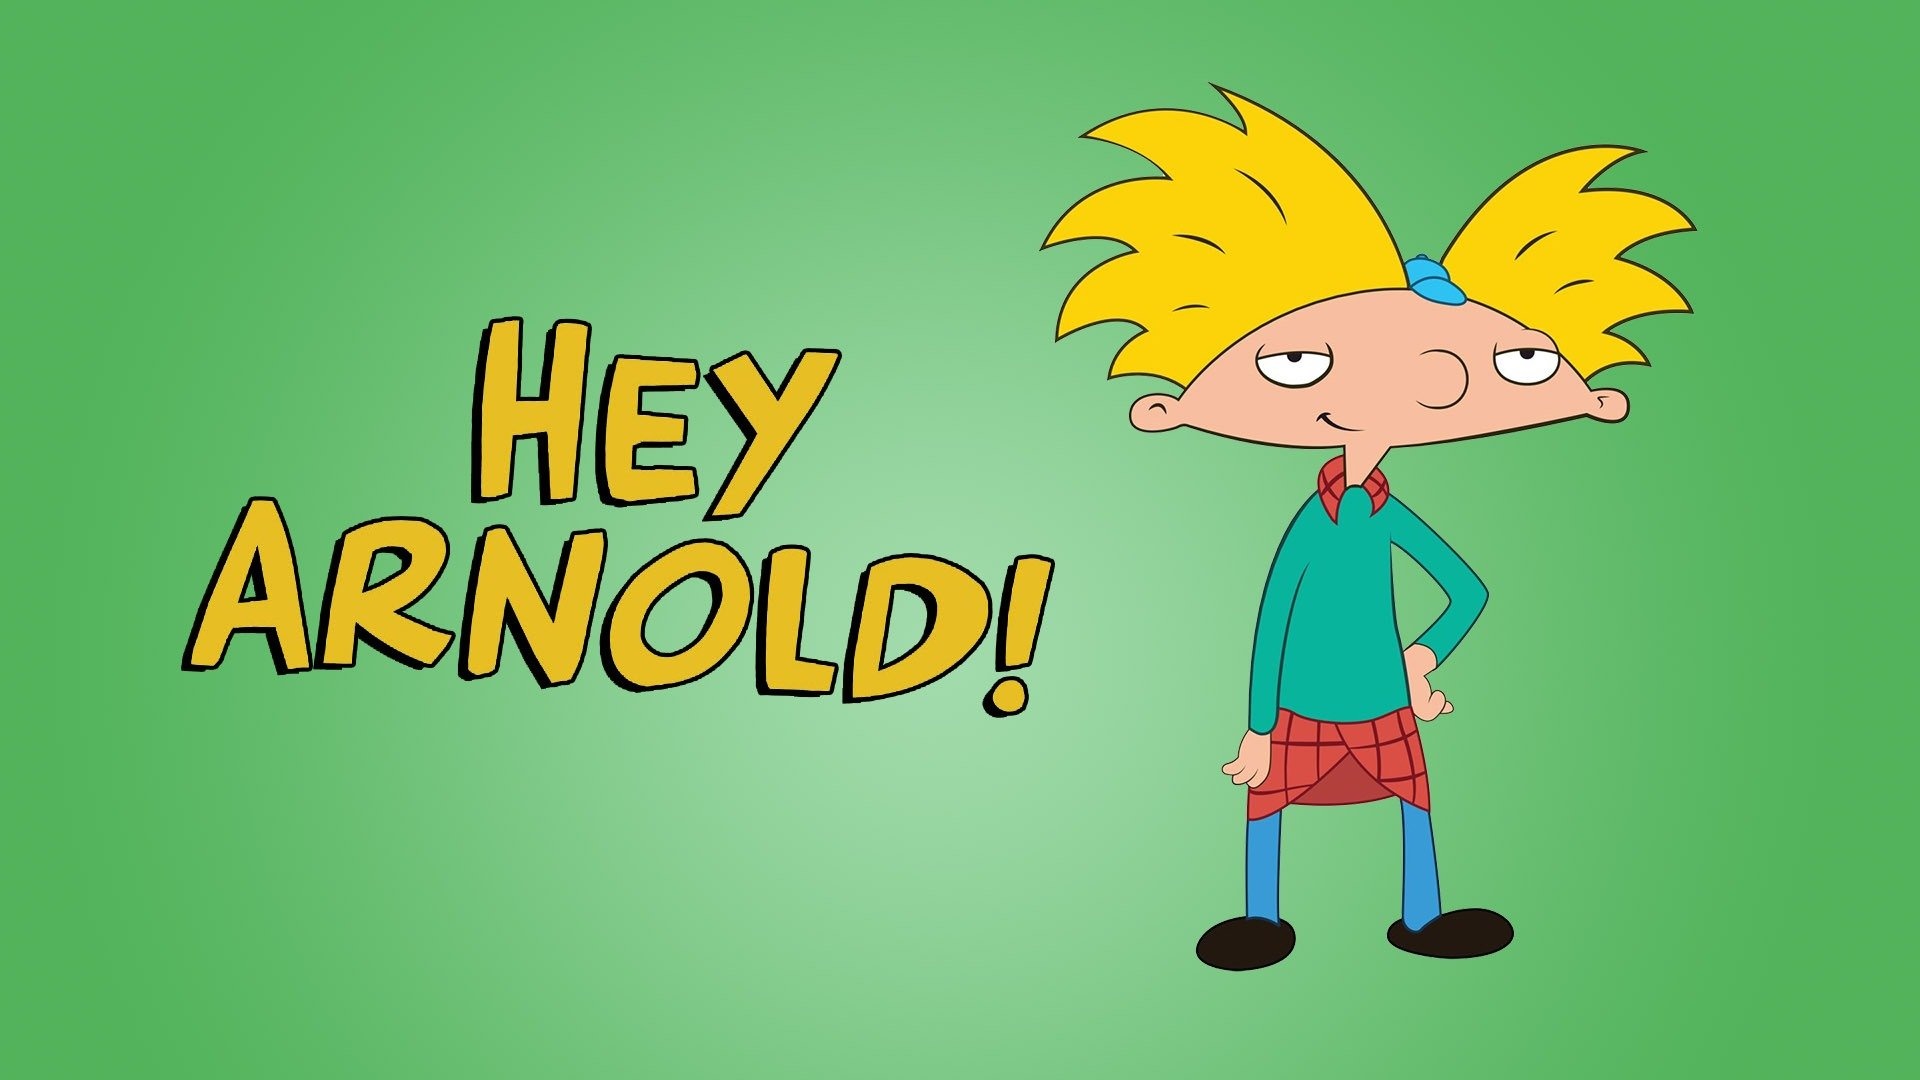 Hey Arnold, Memorable TV show, Classic animation, 1920x1080 Full HD Desktop